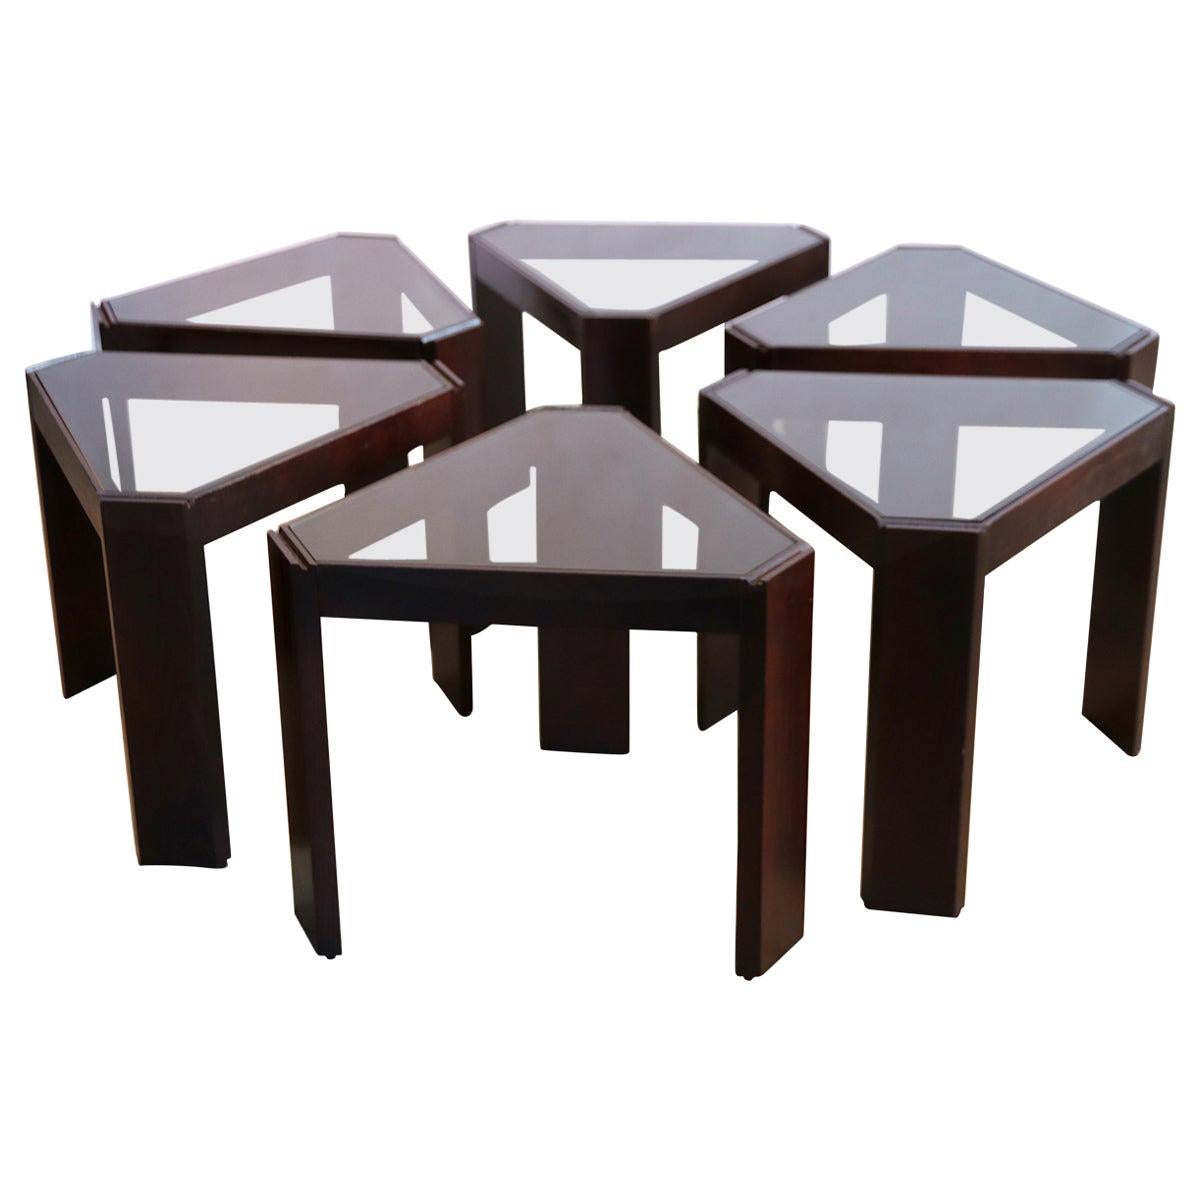 Porada Arredi Stackable Modular Tinted Glass Side Coffee Tables, Set of 6